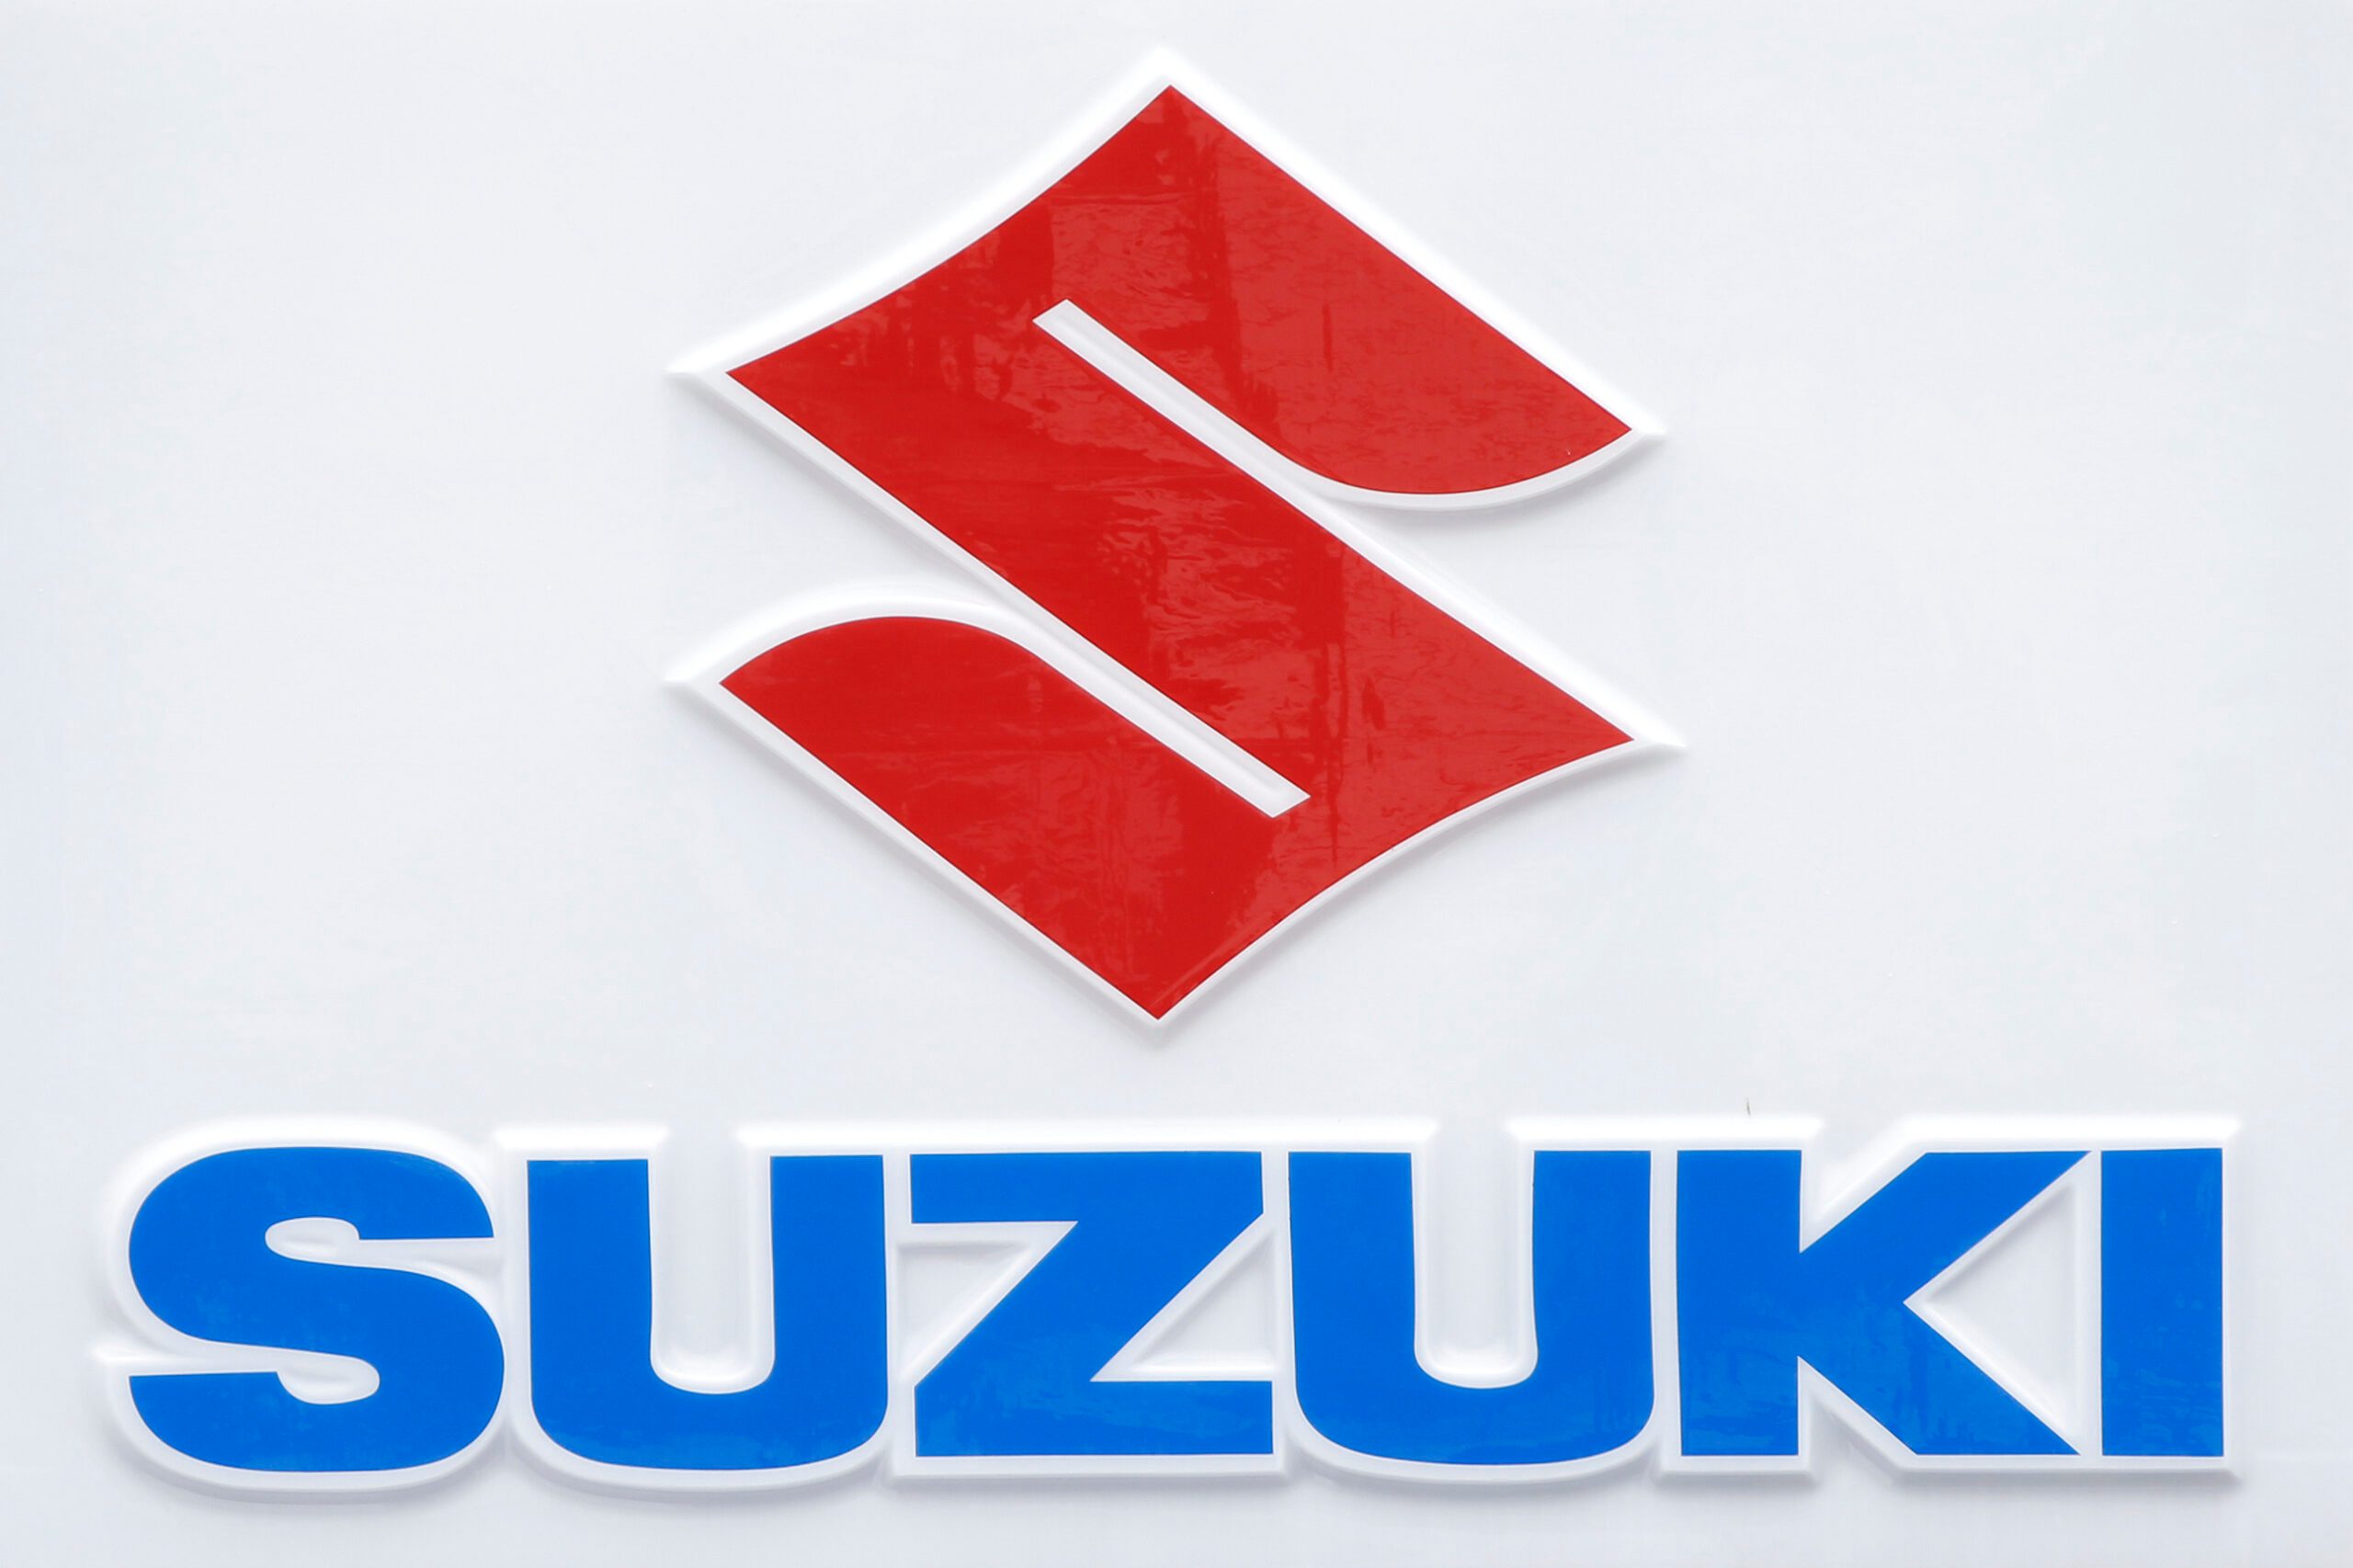 Suzuki denies cheating on fuel, emissions testing